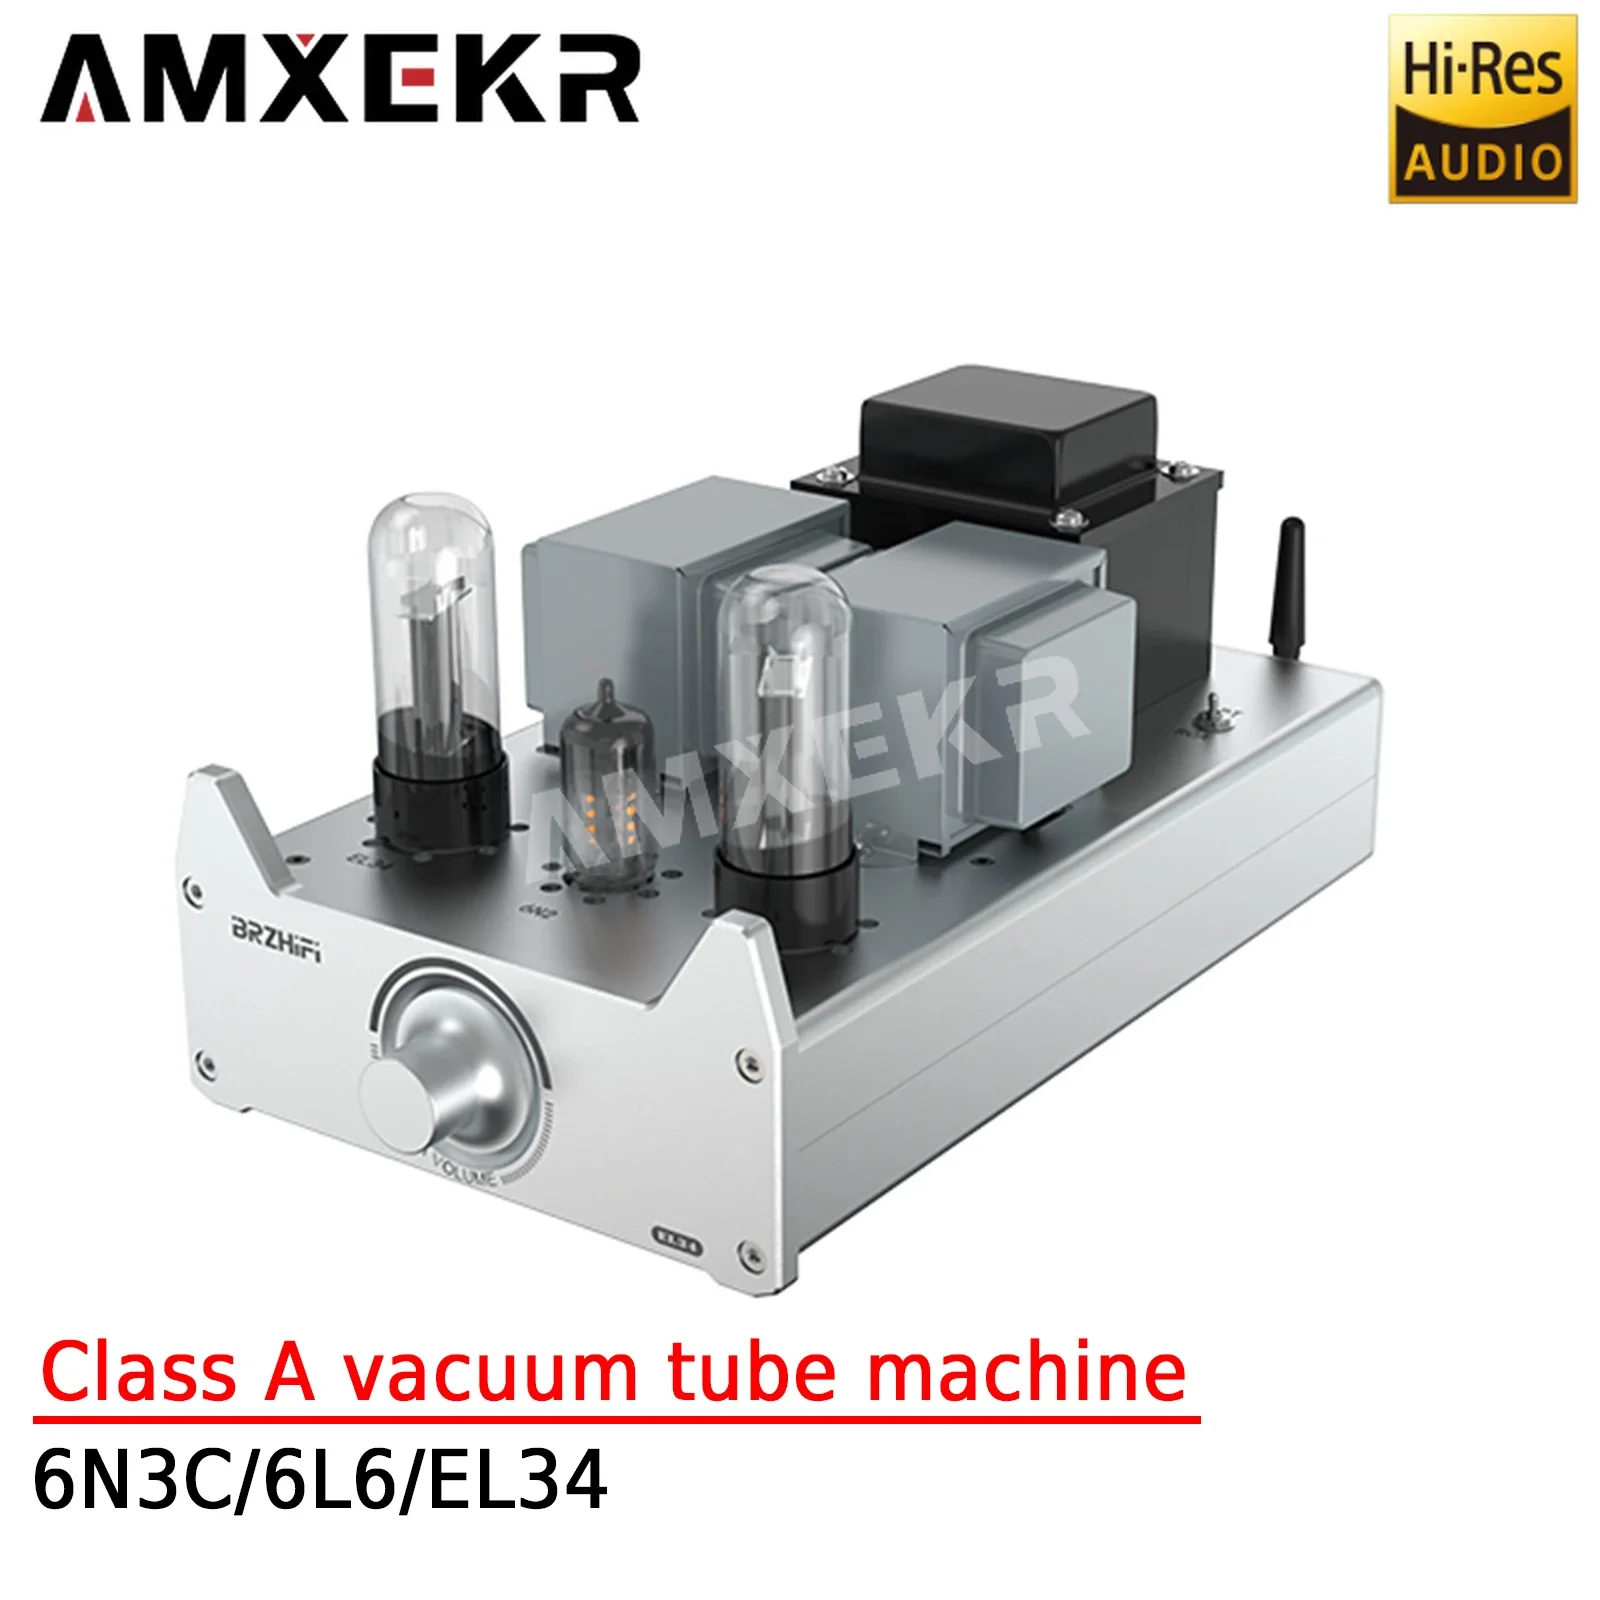 

AMXEKR A20B Single-ended Vacuum Tube Machine 8W*2 Class A Power Amplifier HiFi Fever Grade 6N3C/6L6/EL34